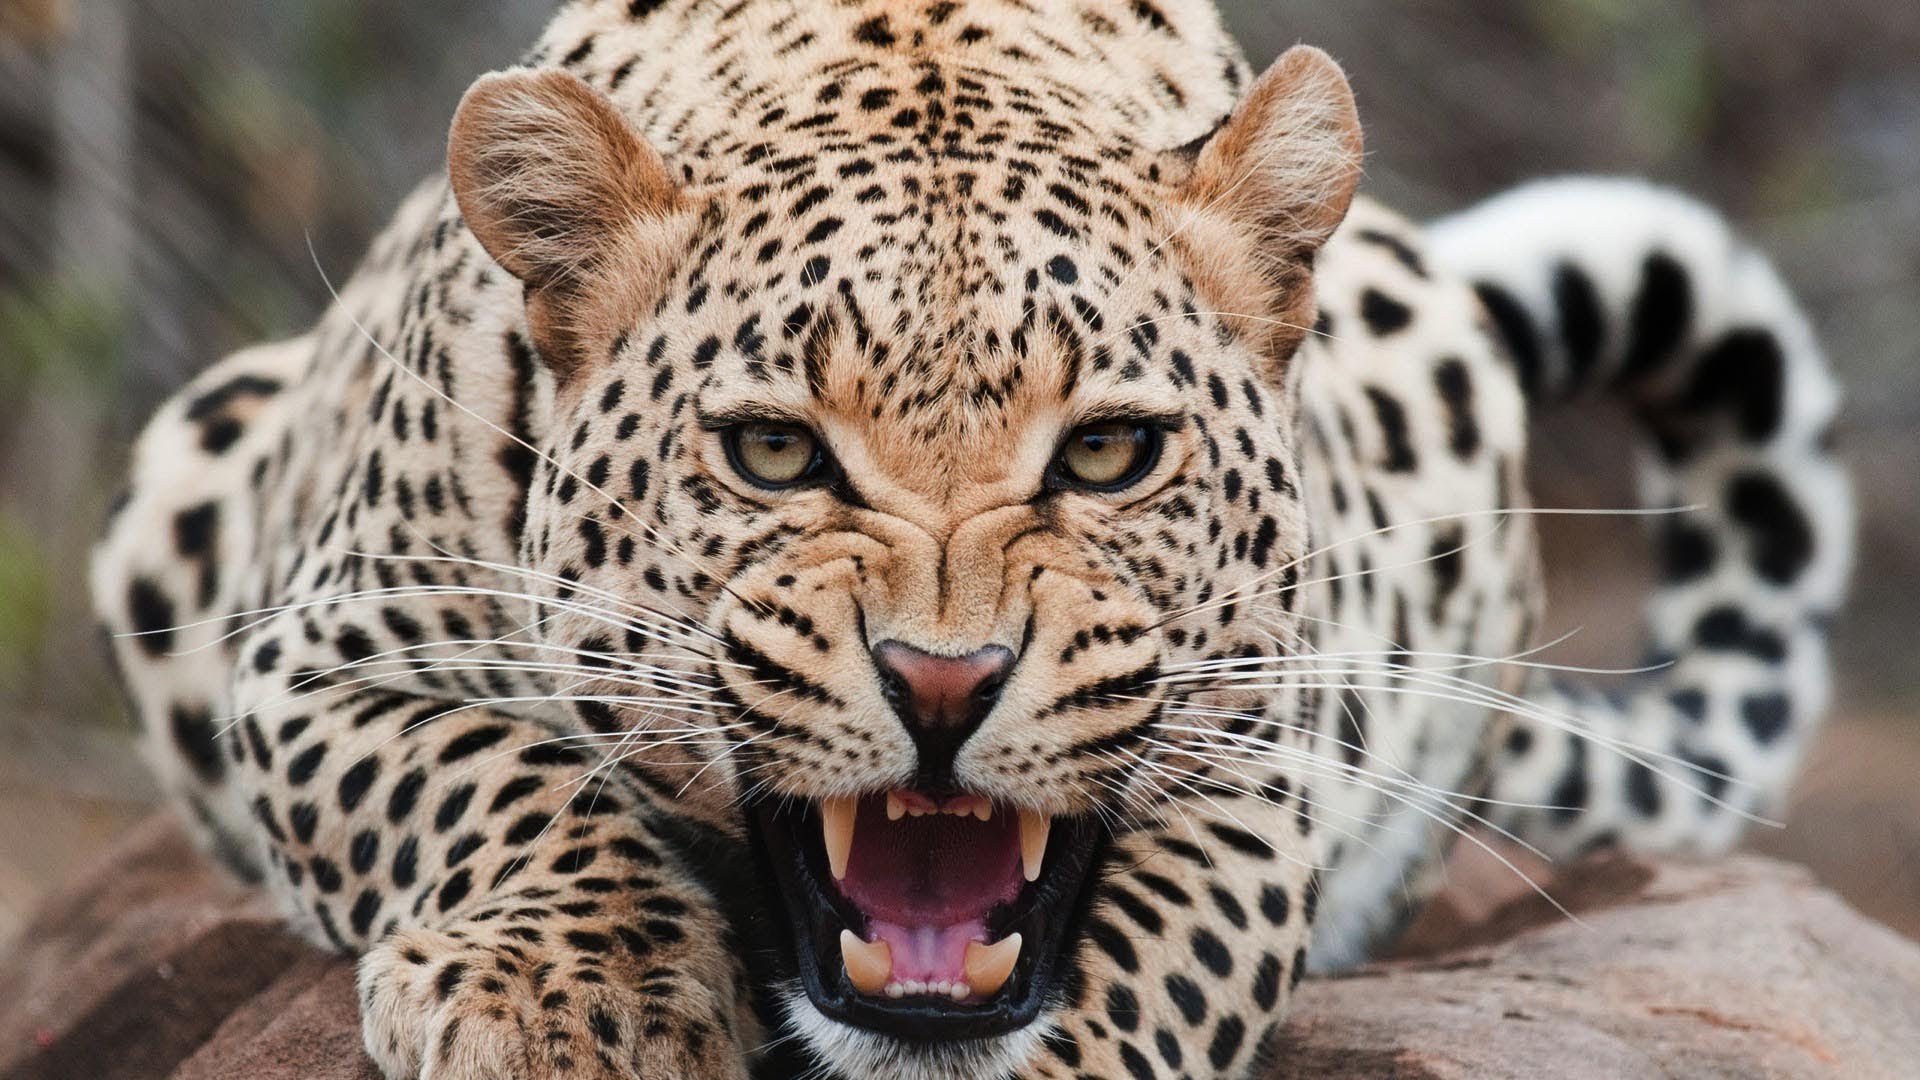 Jaguar animals wallpapers hd desktop and mobile backgrounds